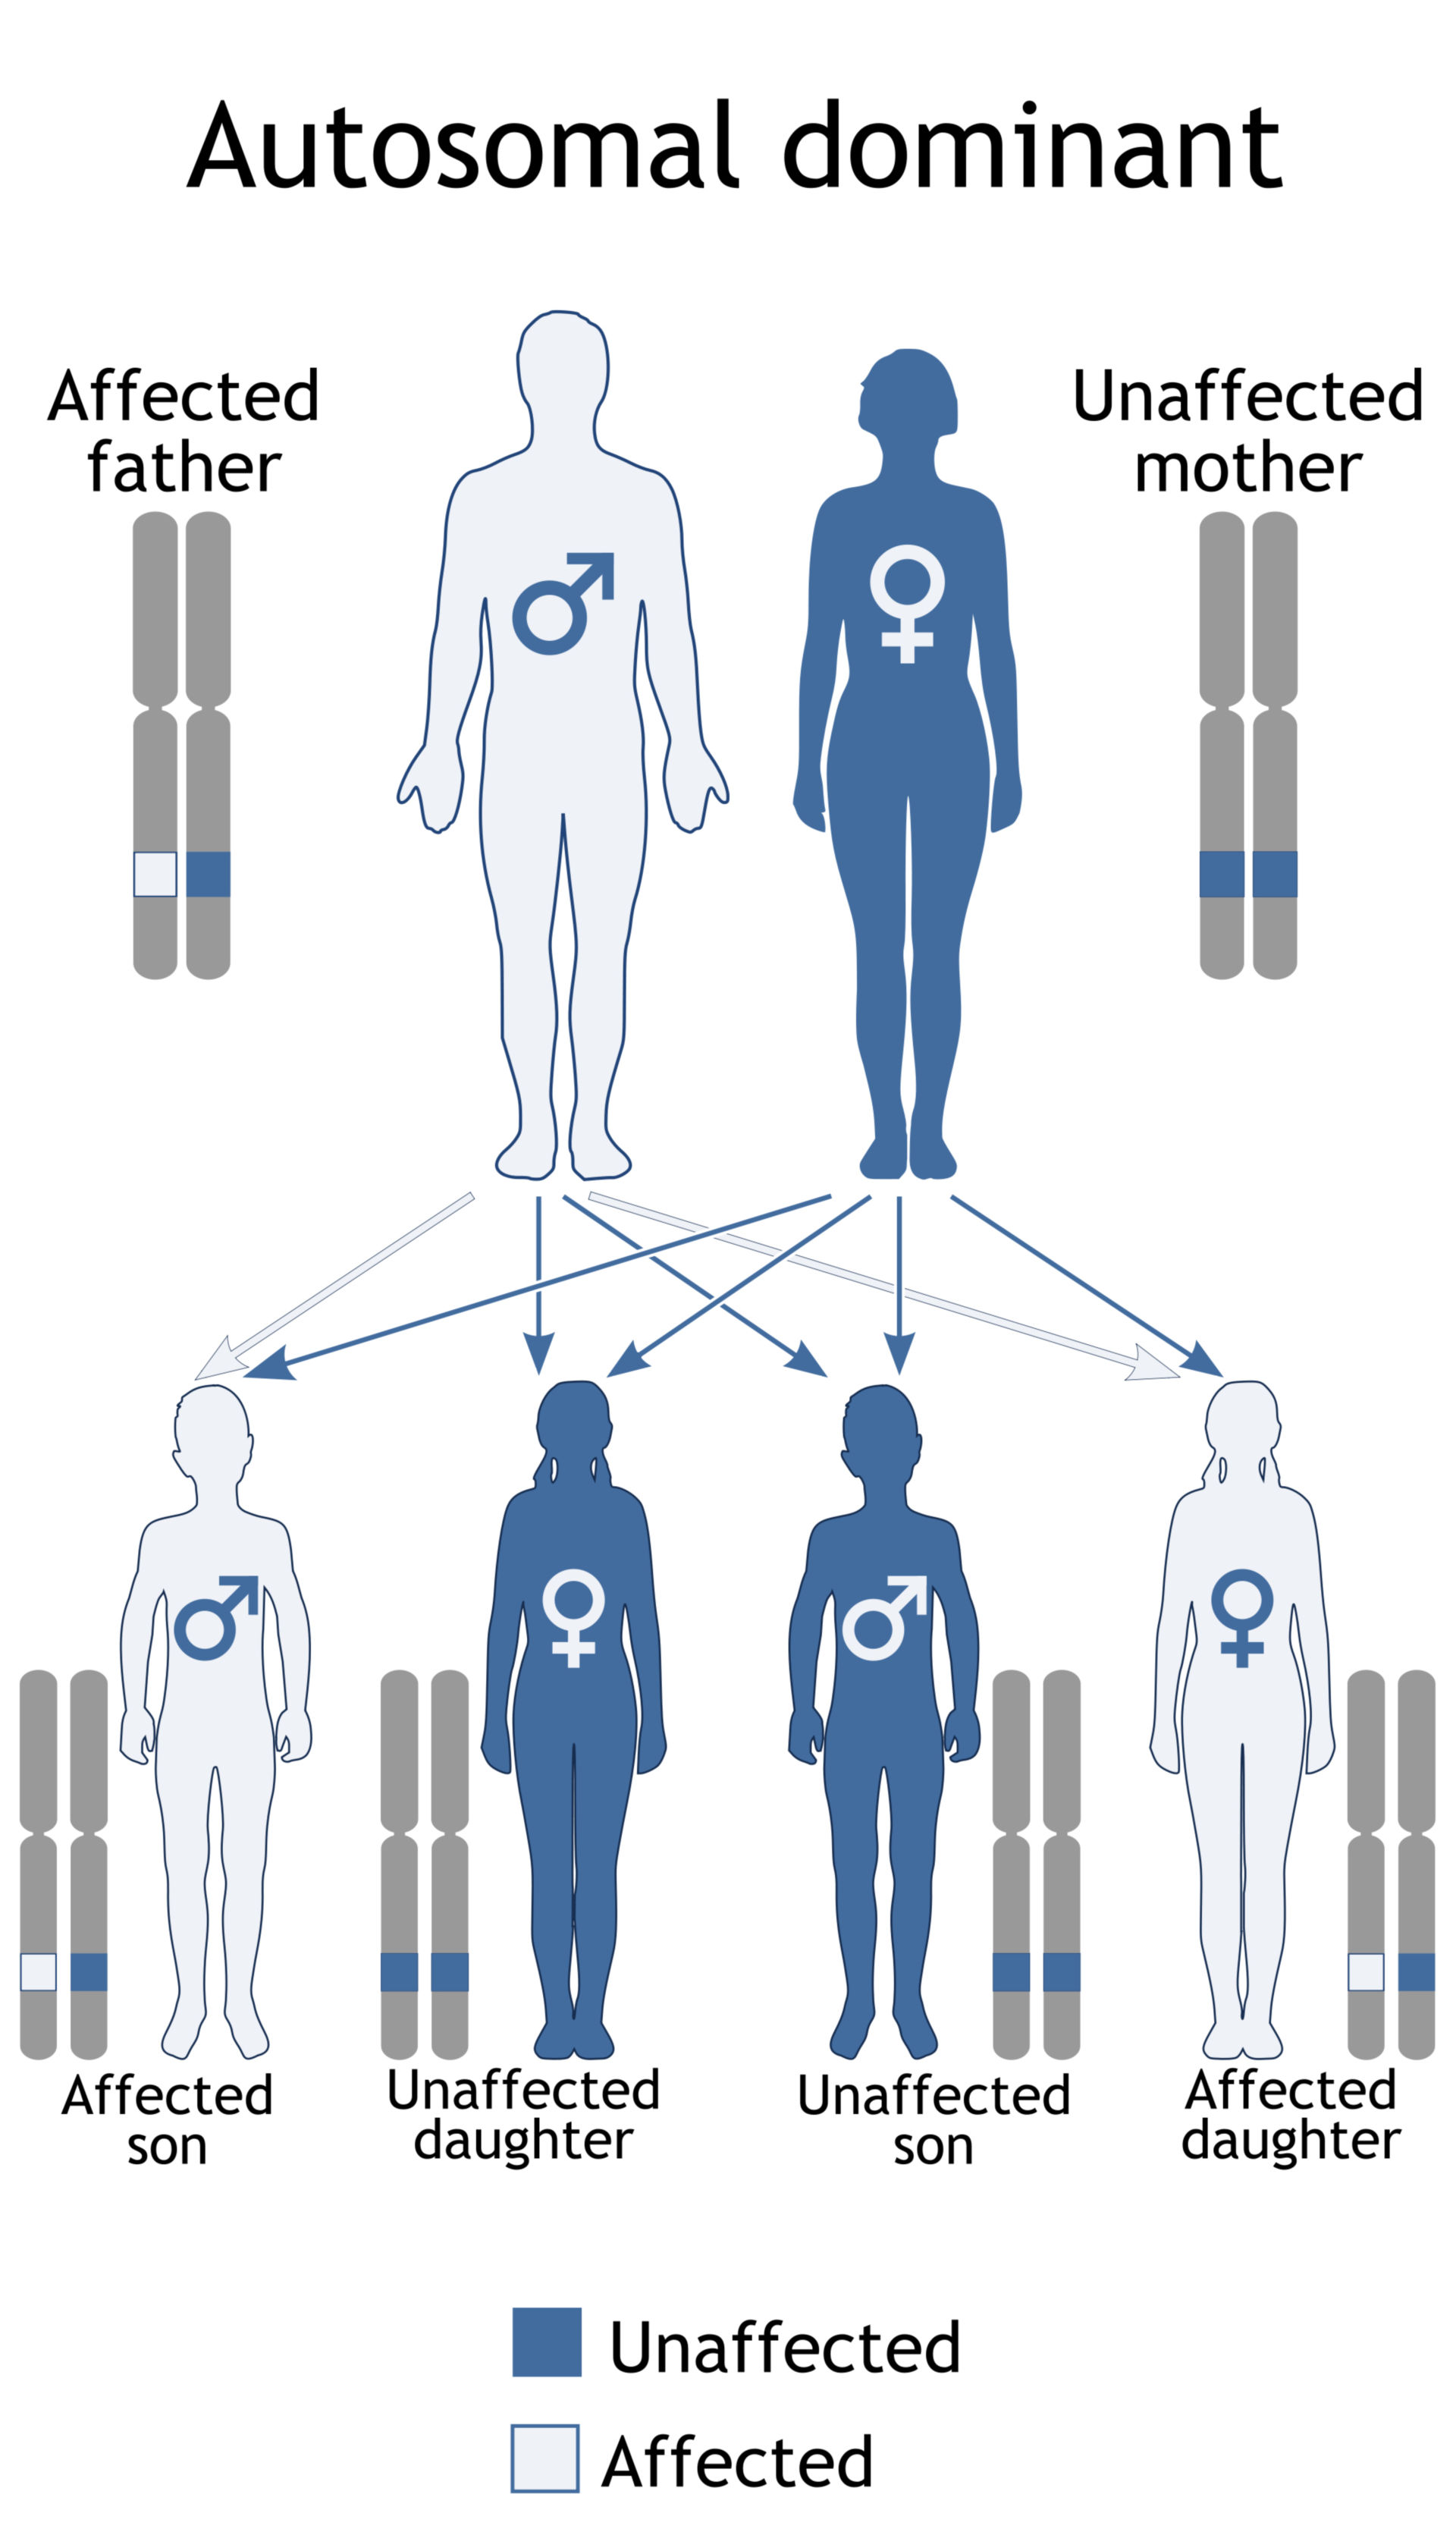 Autosomal dominant heredity